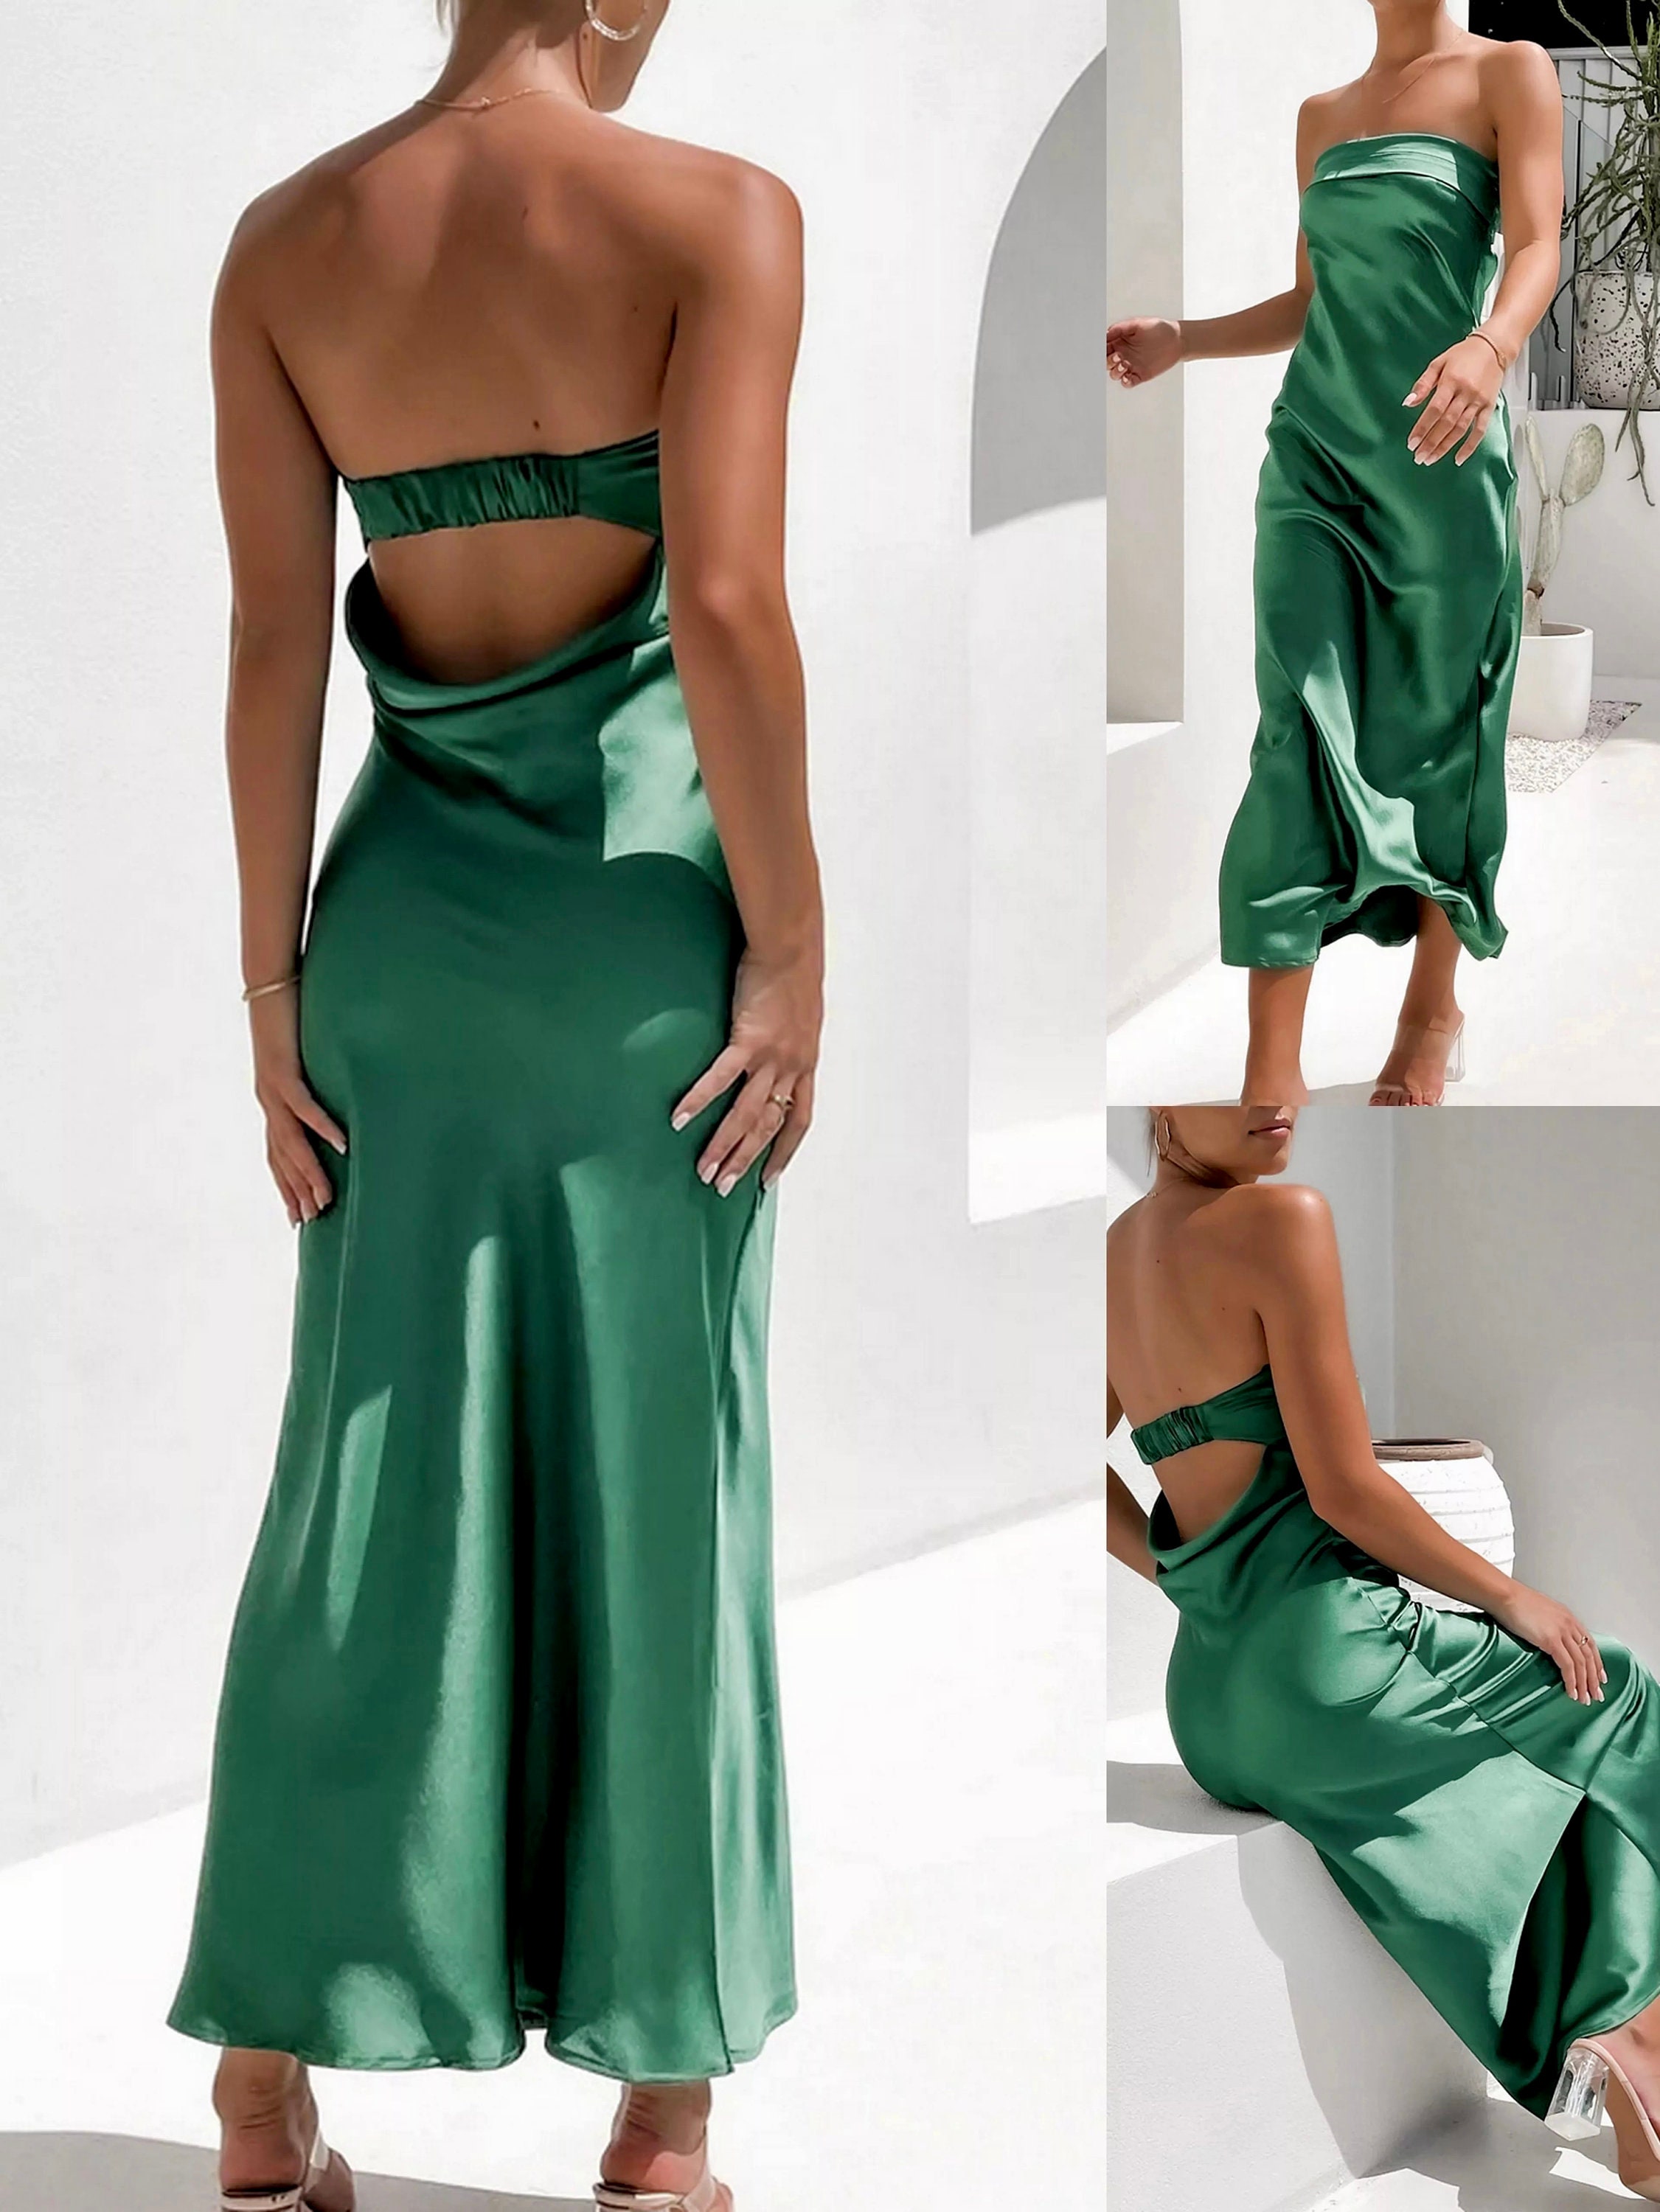 Satin Green Basic Strapless Dress Slim Backless Hollow Maxi Dress